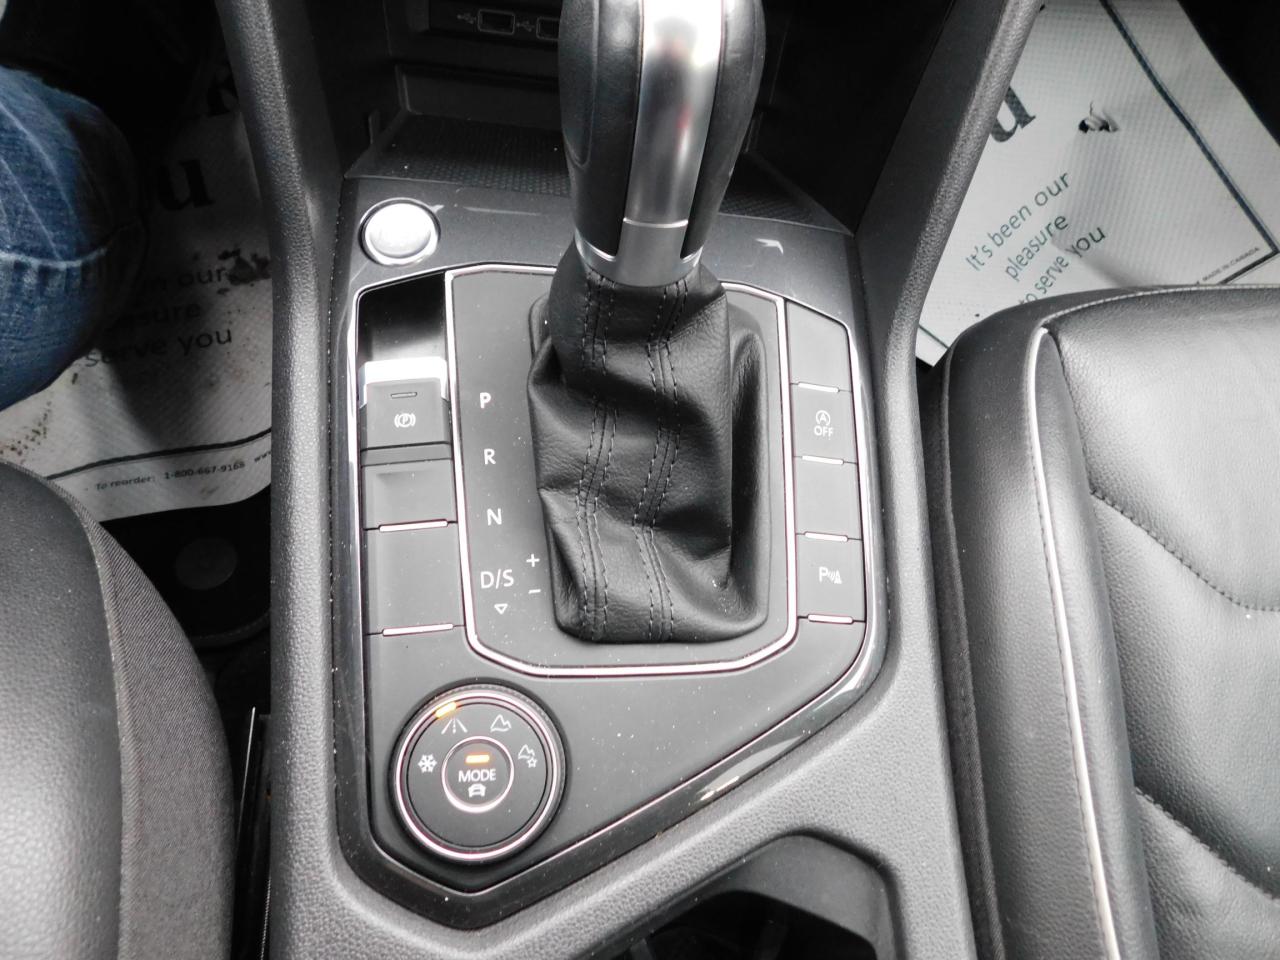 2019 Volkswagen Tiguan | leather | sunroof | nav | heated seats - Photo #12